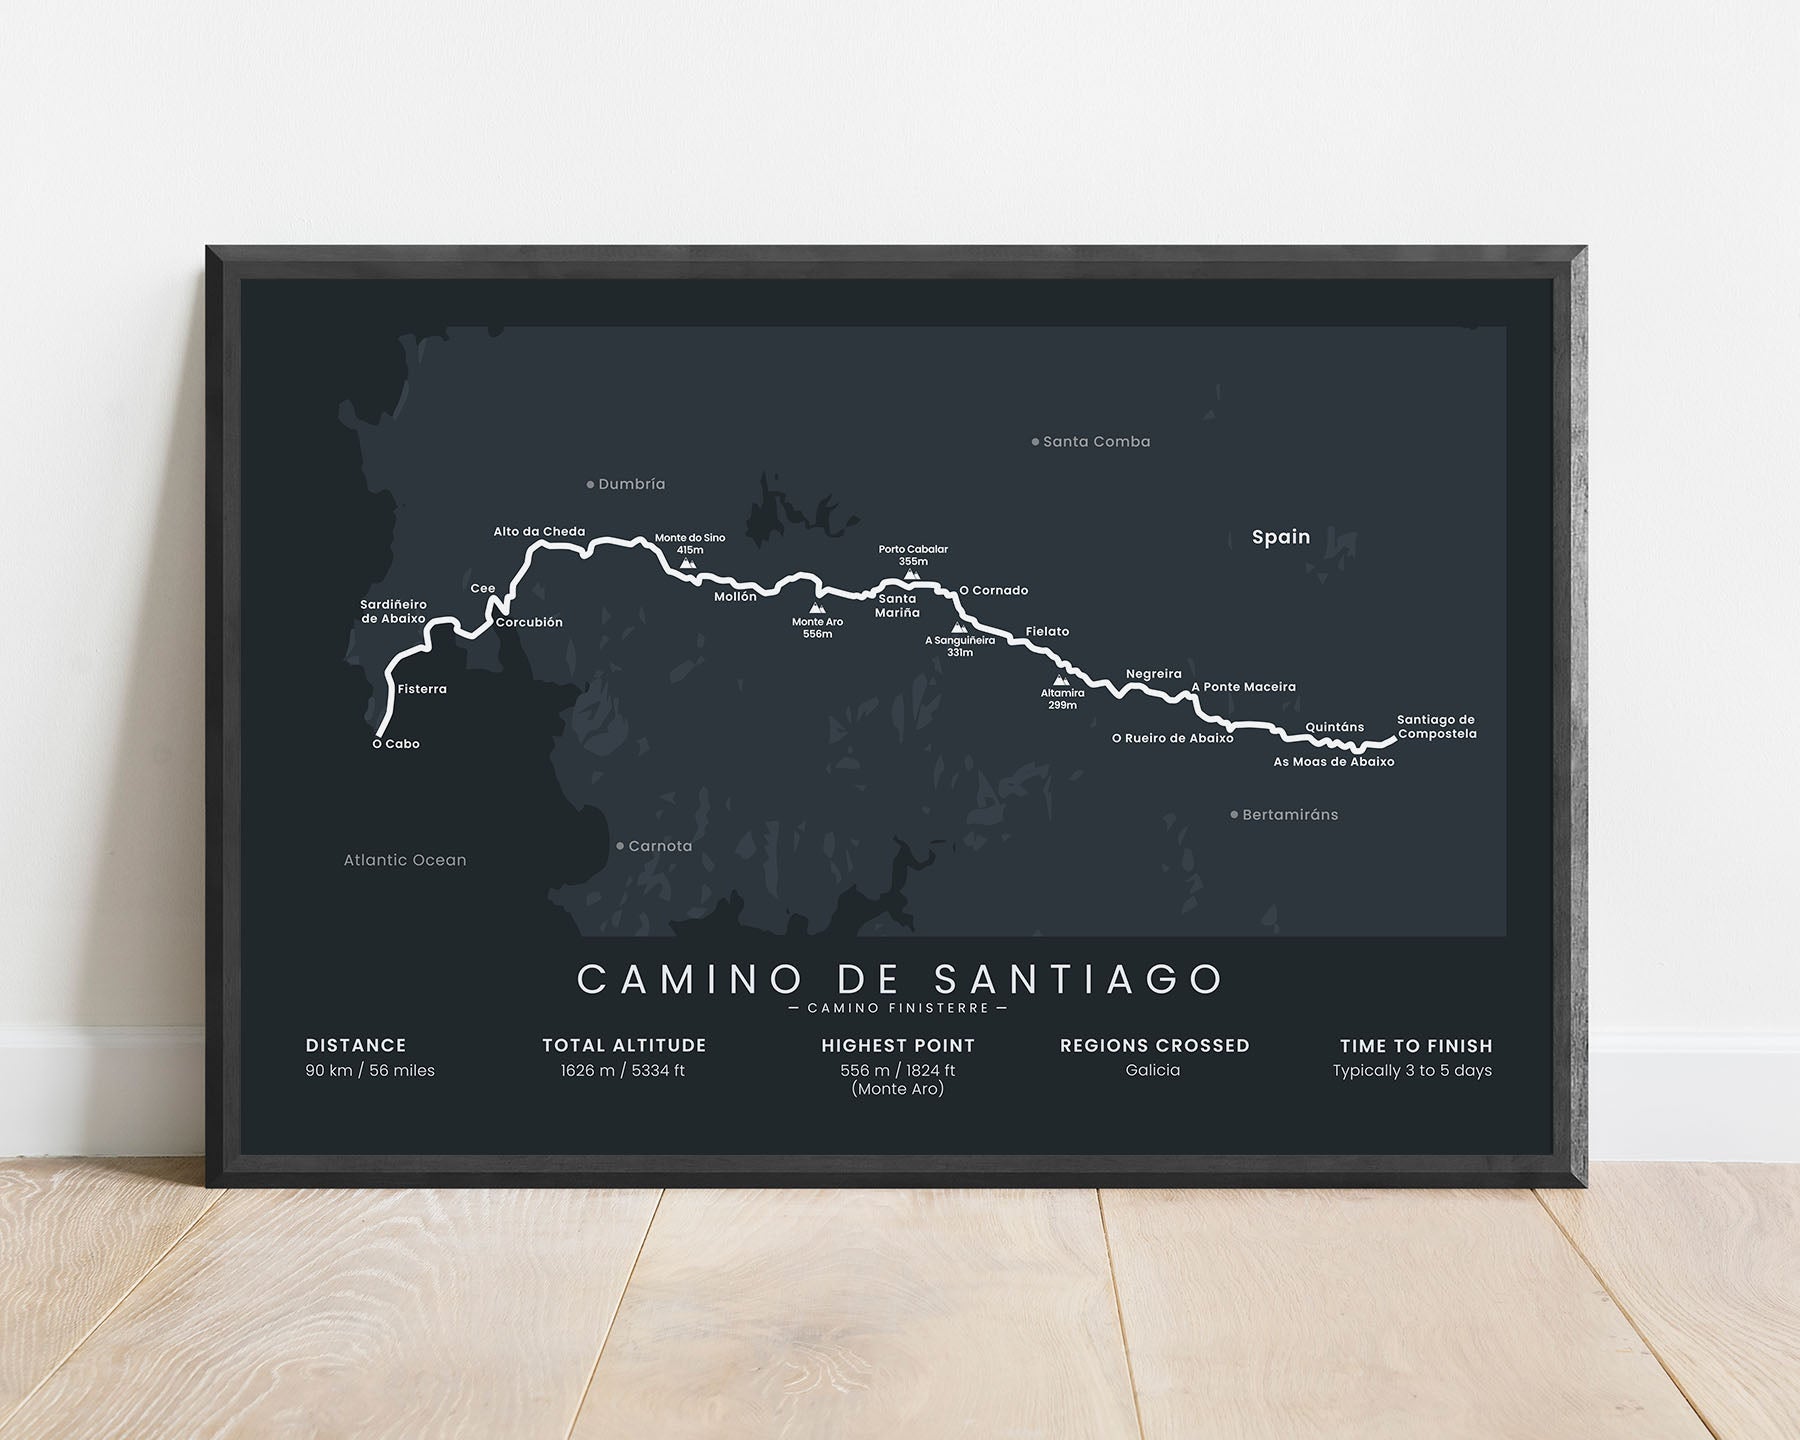 Camino de Santiago (Galicia) trail print with black background